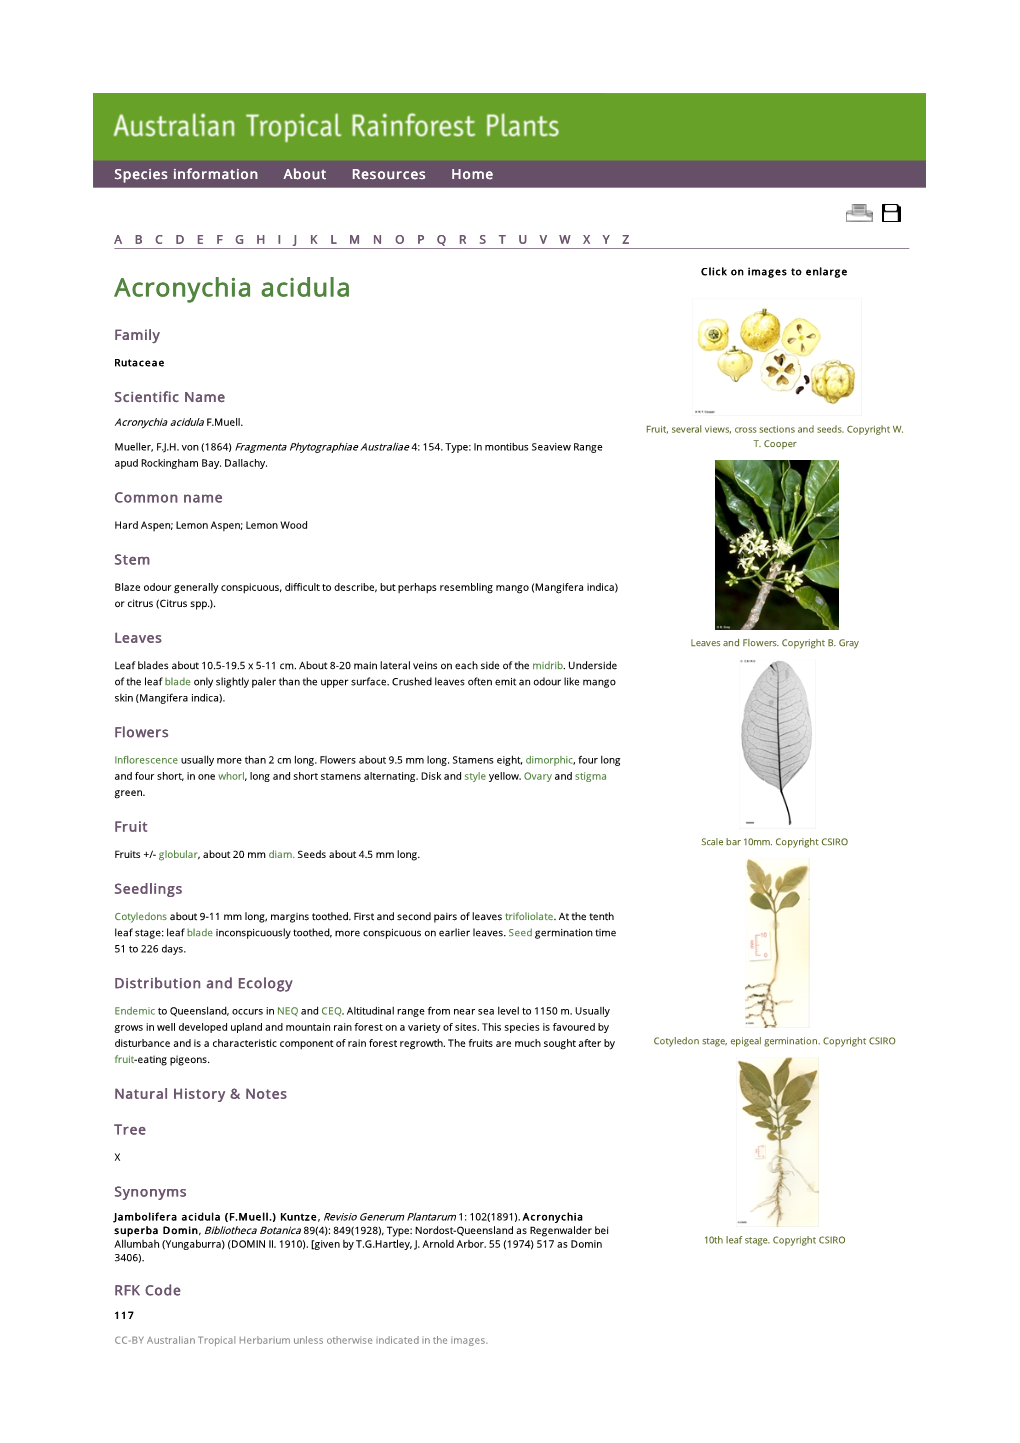 Acronychia Acidula Click on Images to Enlarge